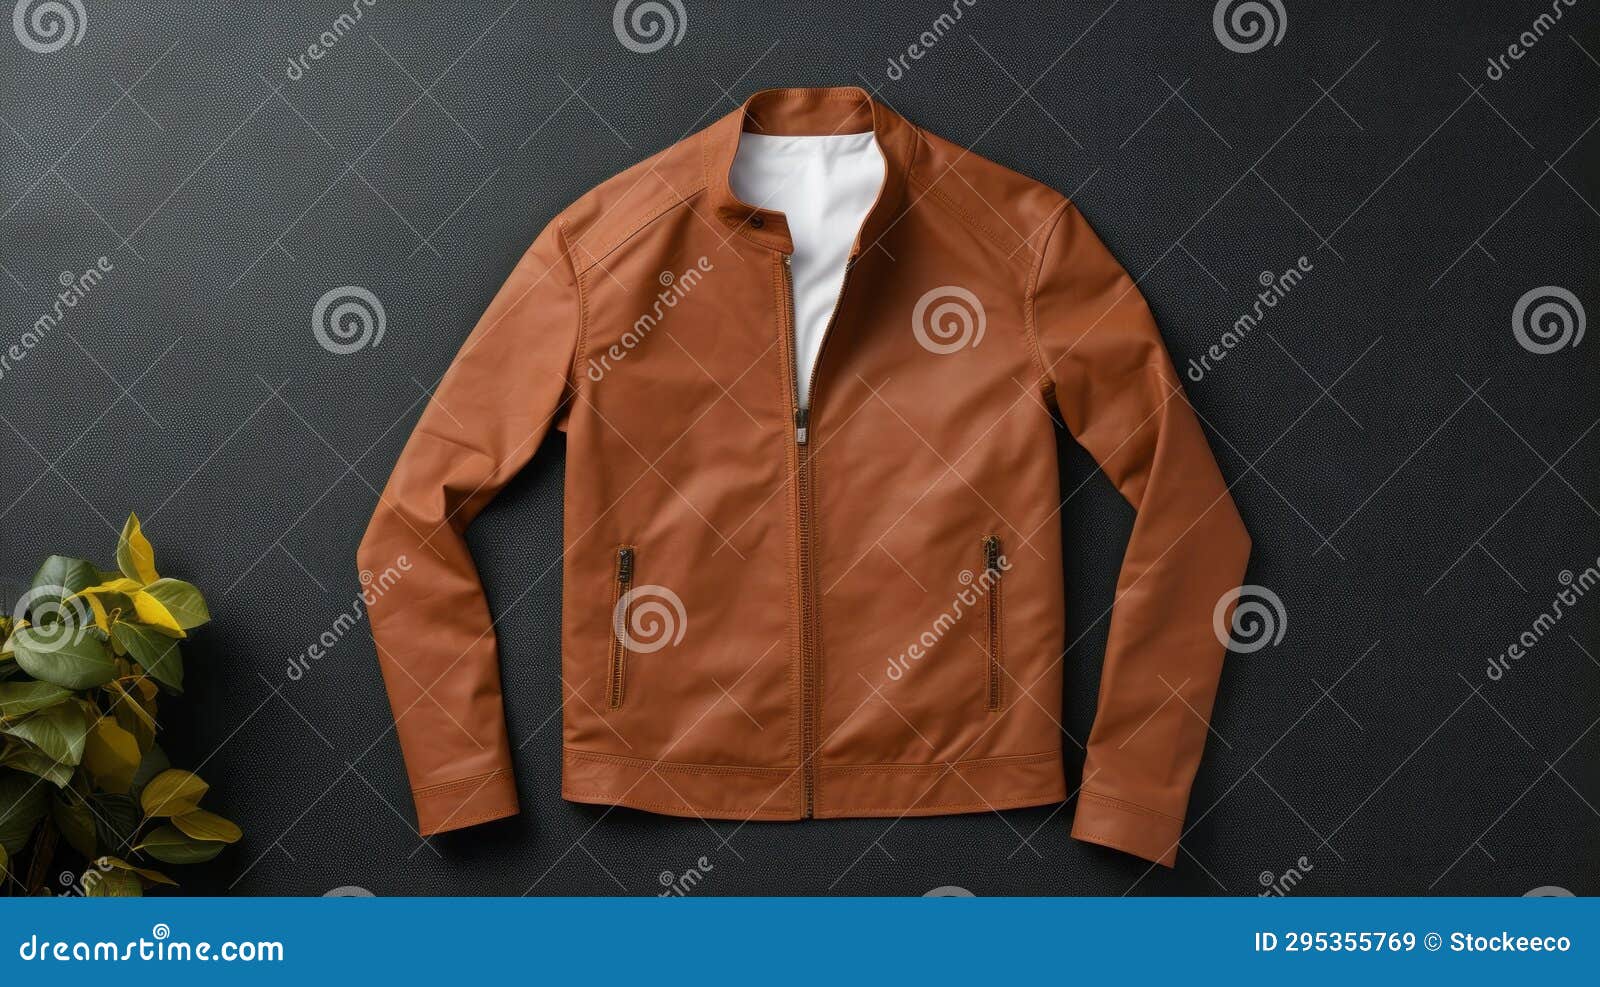 brown leather jacket mockup on brick background